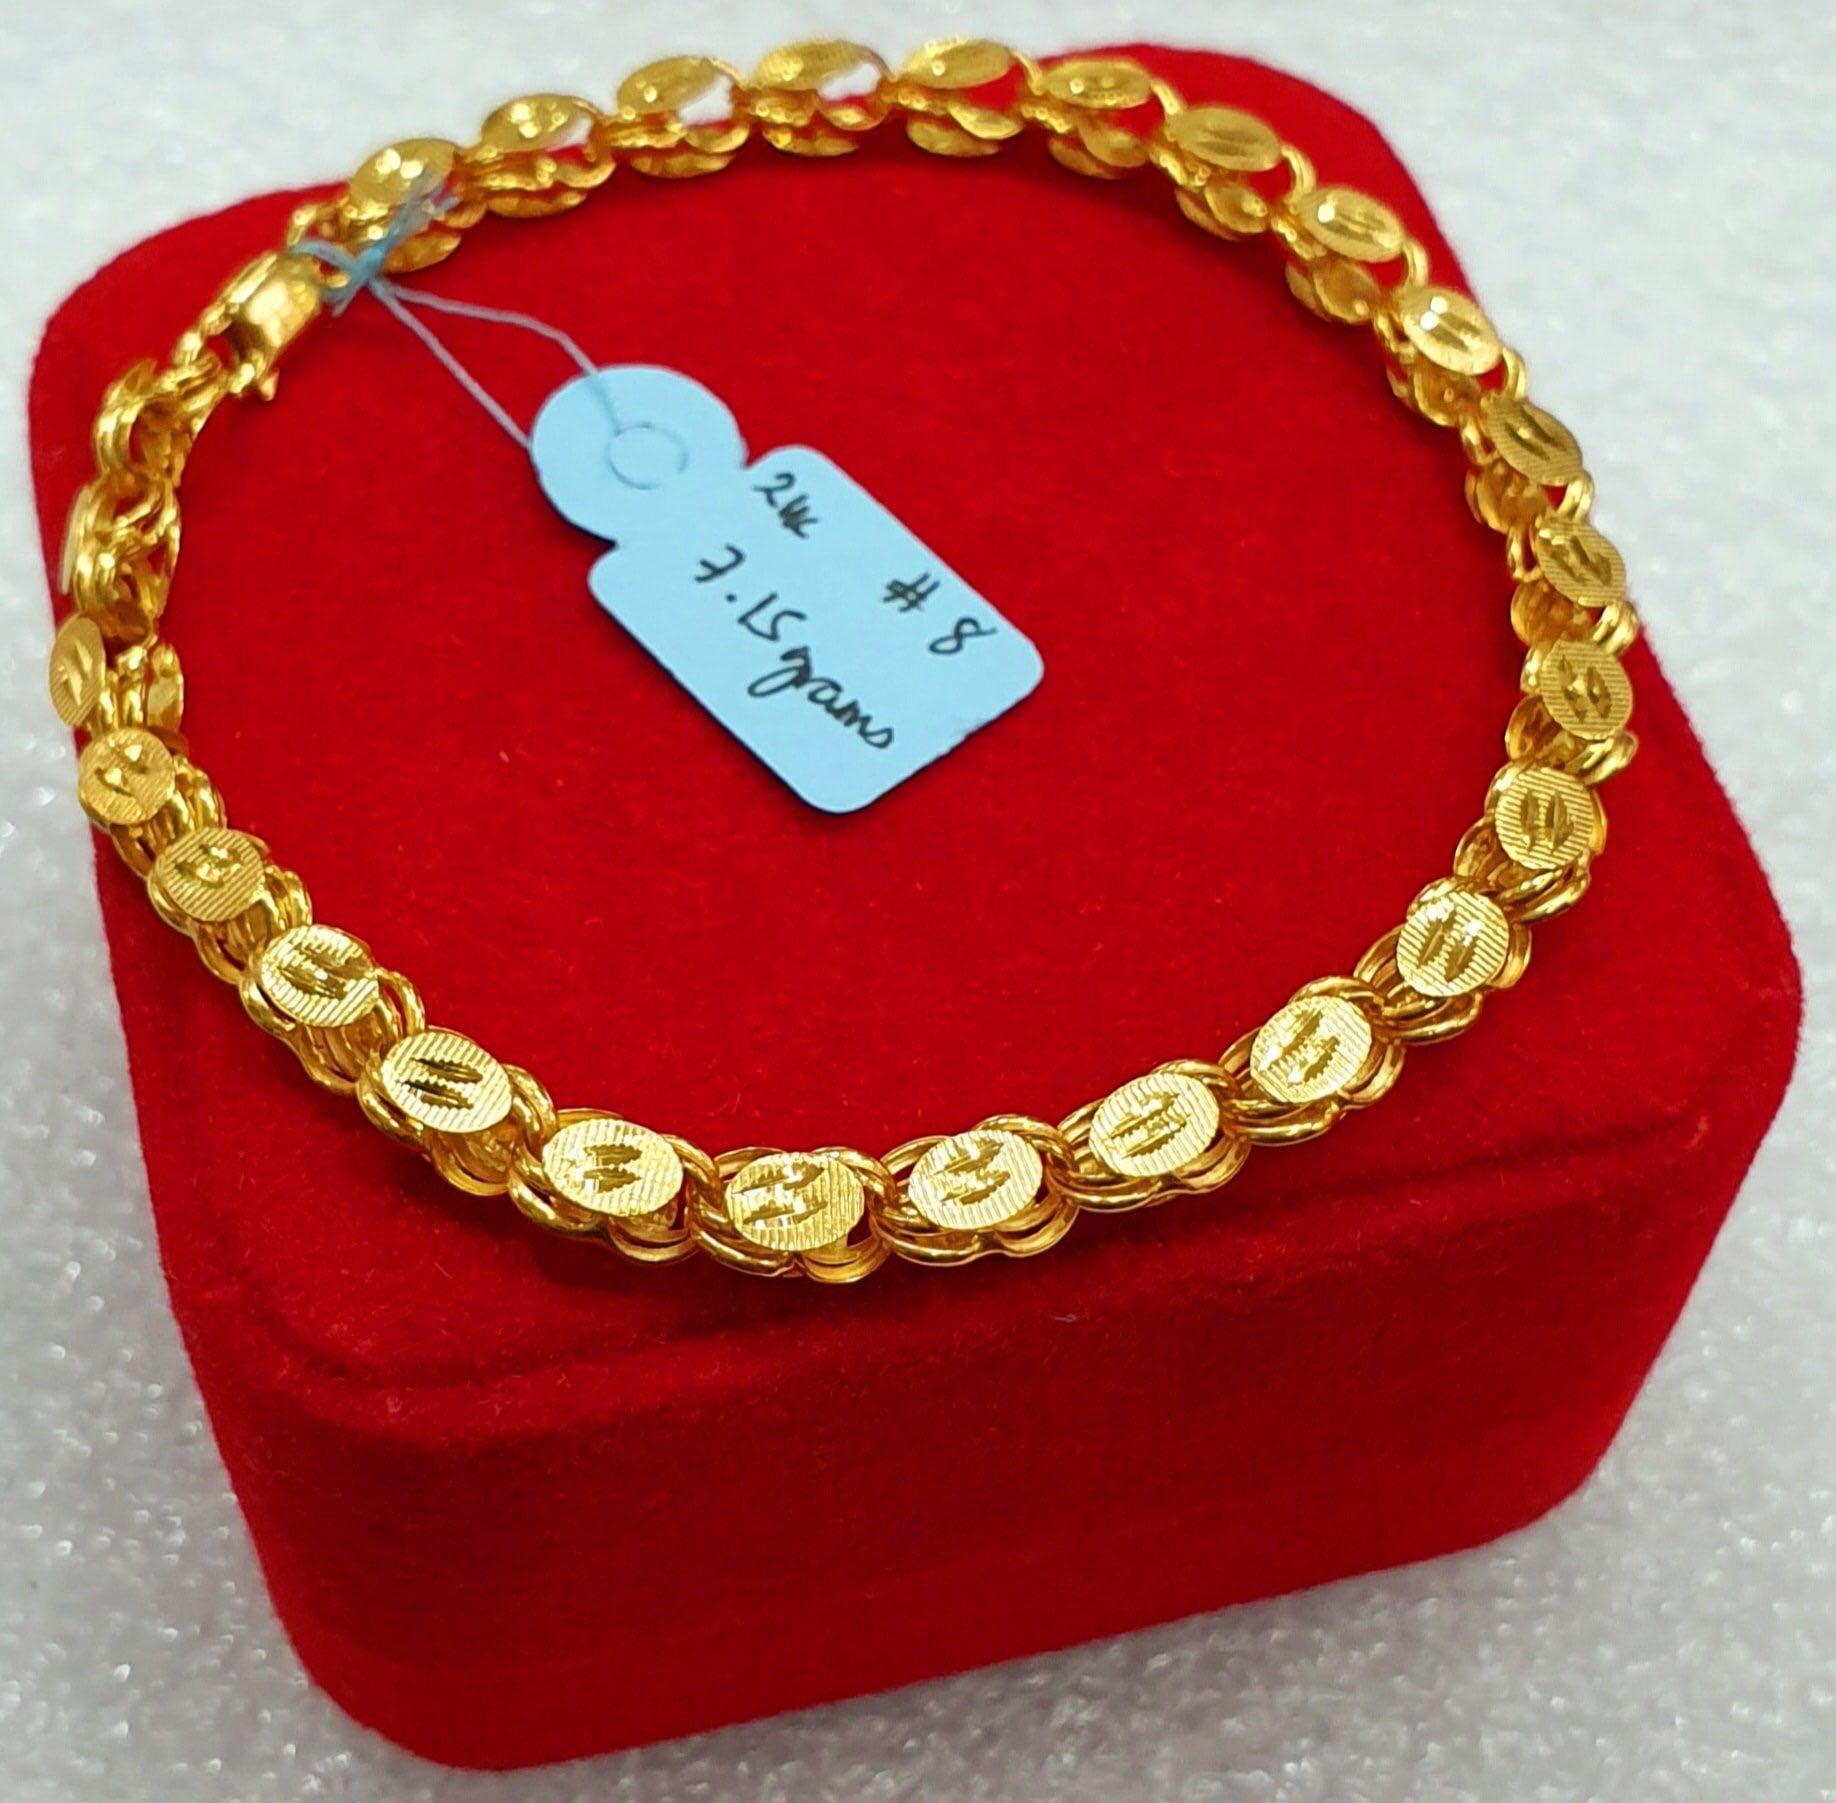 New design gold bracelet/How to Make Gold Bracelet - YouTube